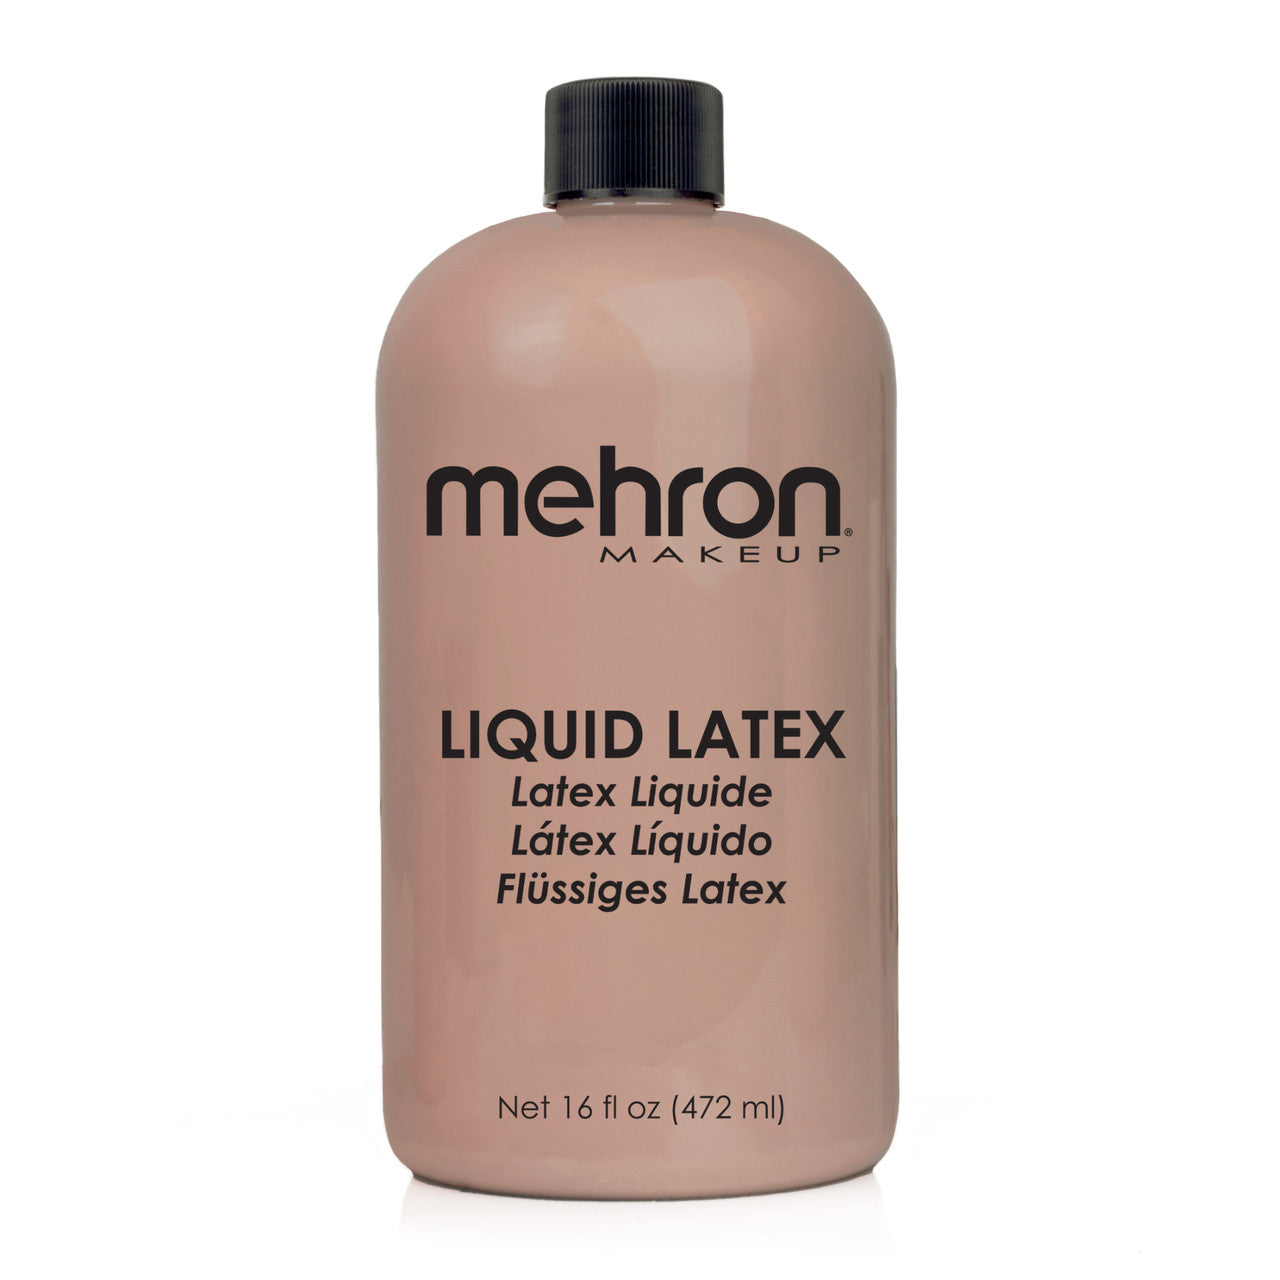 Cosmetic Liquid Latex for Sensitive Skin - Black Lagoon 4.5 oz